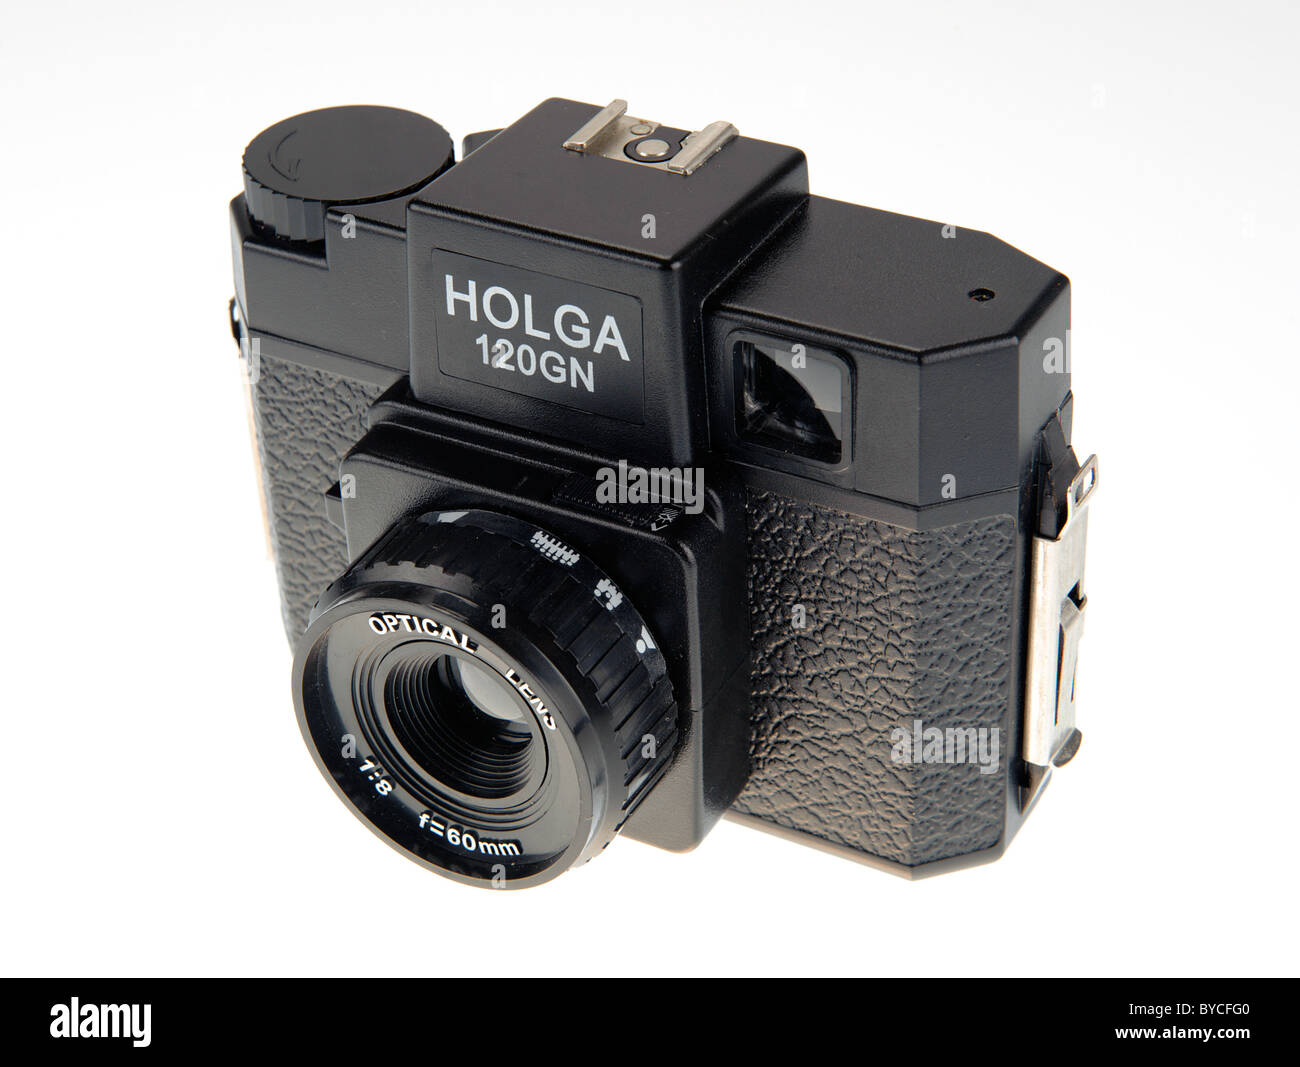 Holga camera -Fotos und -Bildmaterial in hoher Auflösung – Alamy